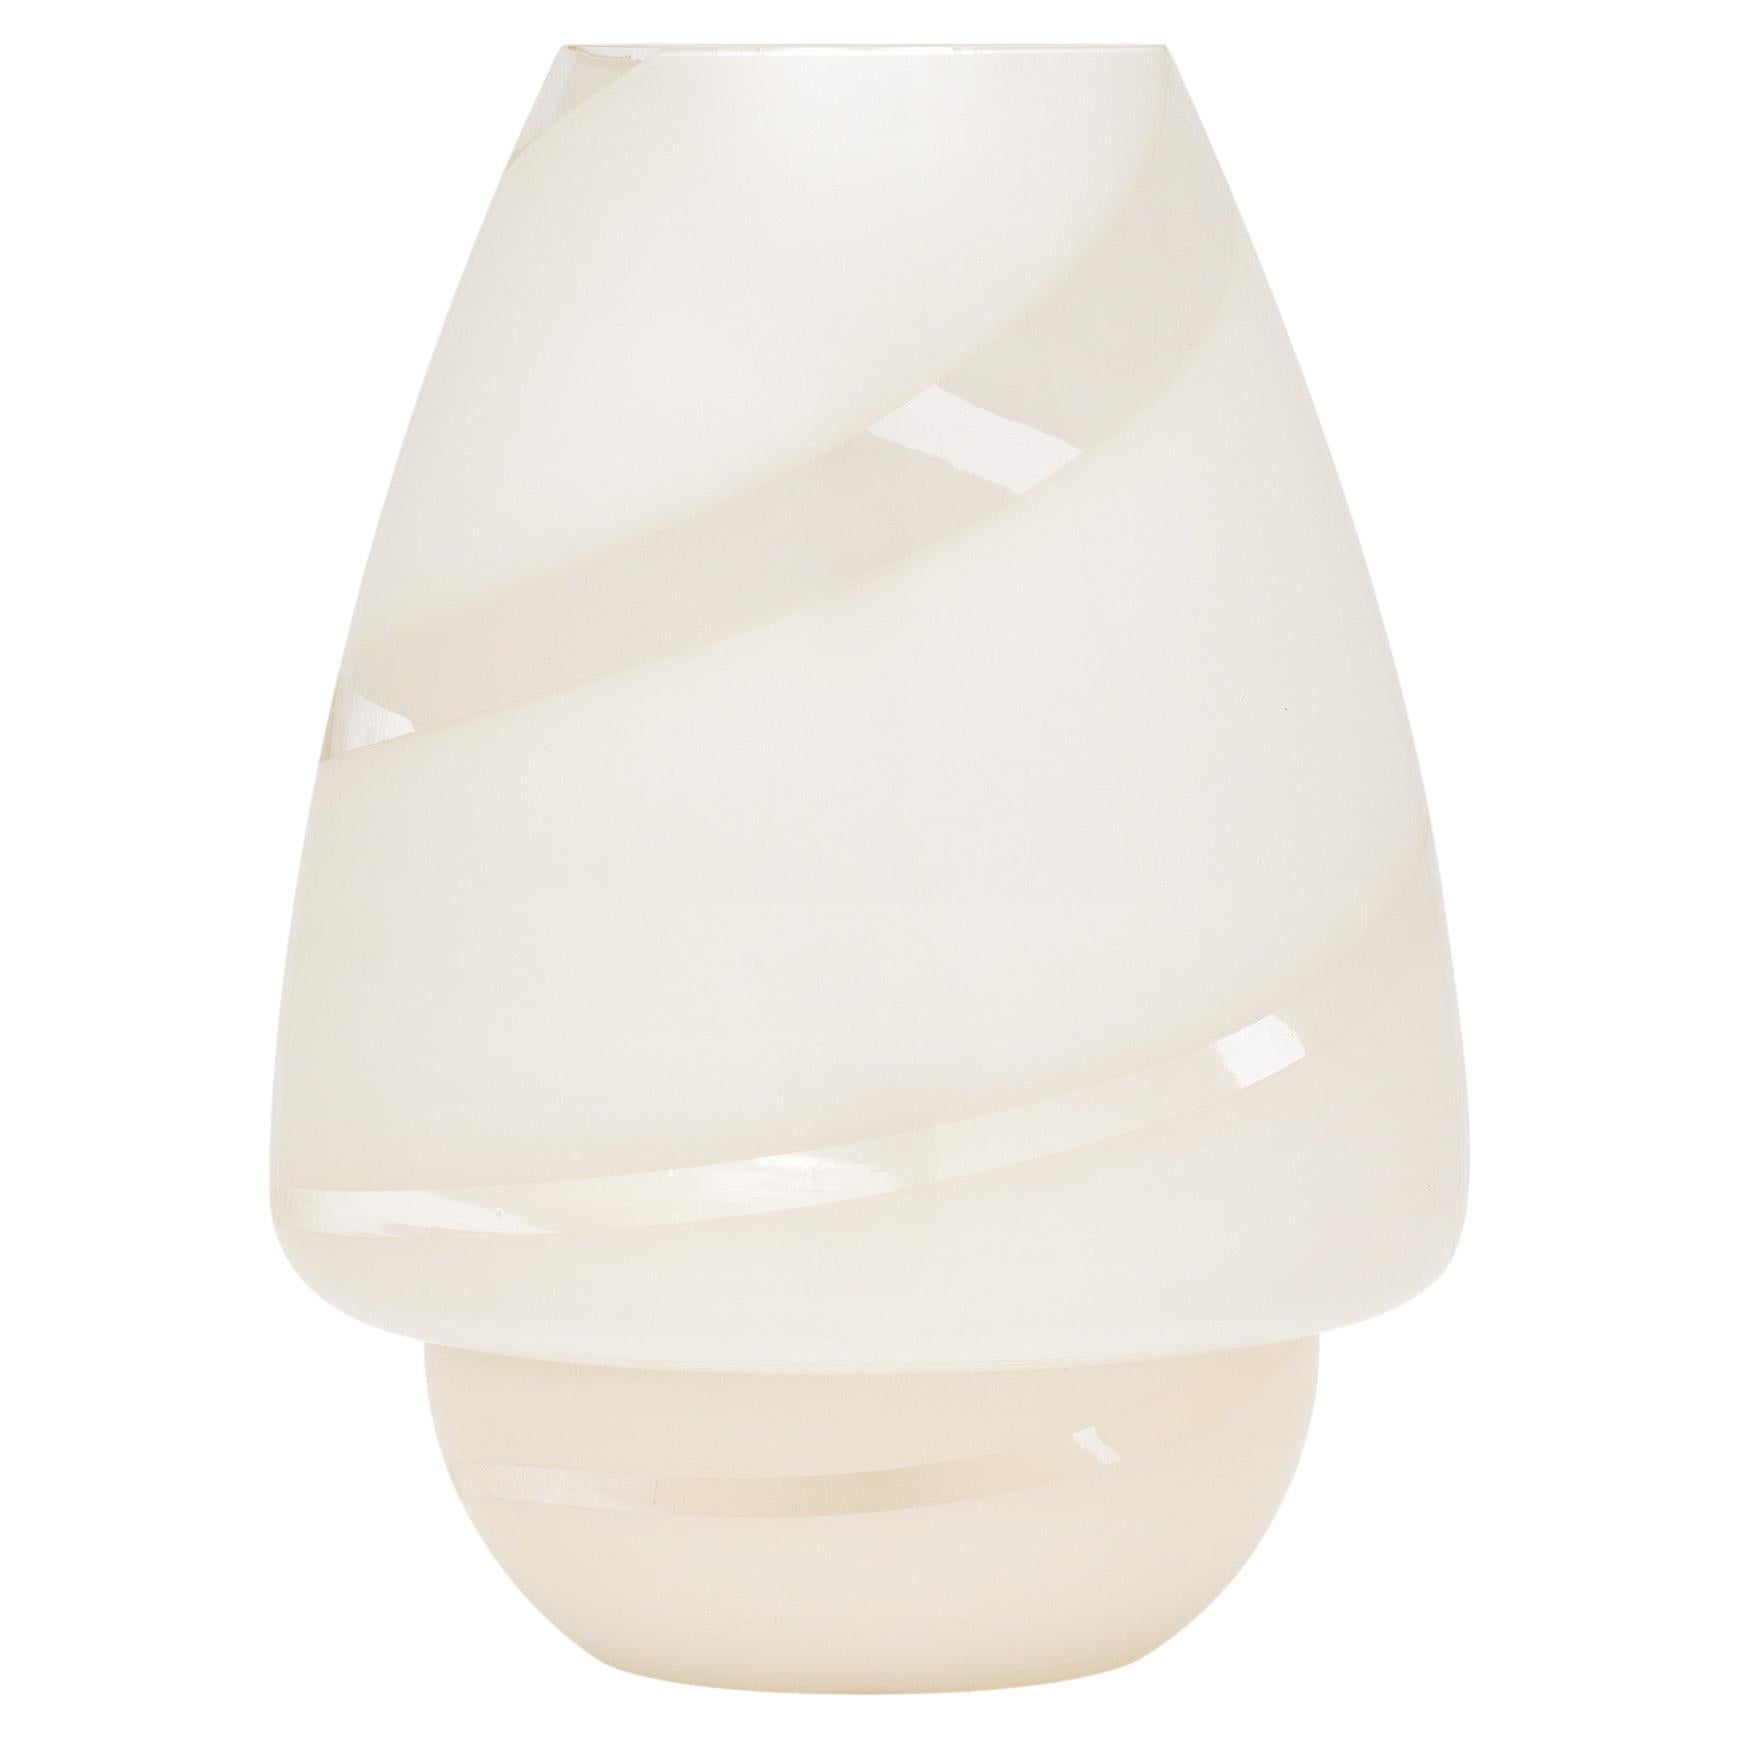 Murano Glass Vintage Lamp